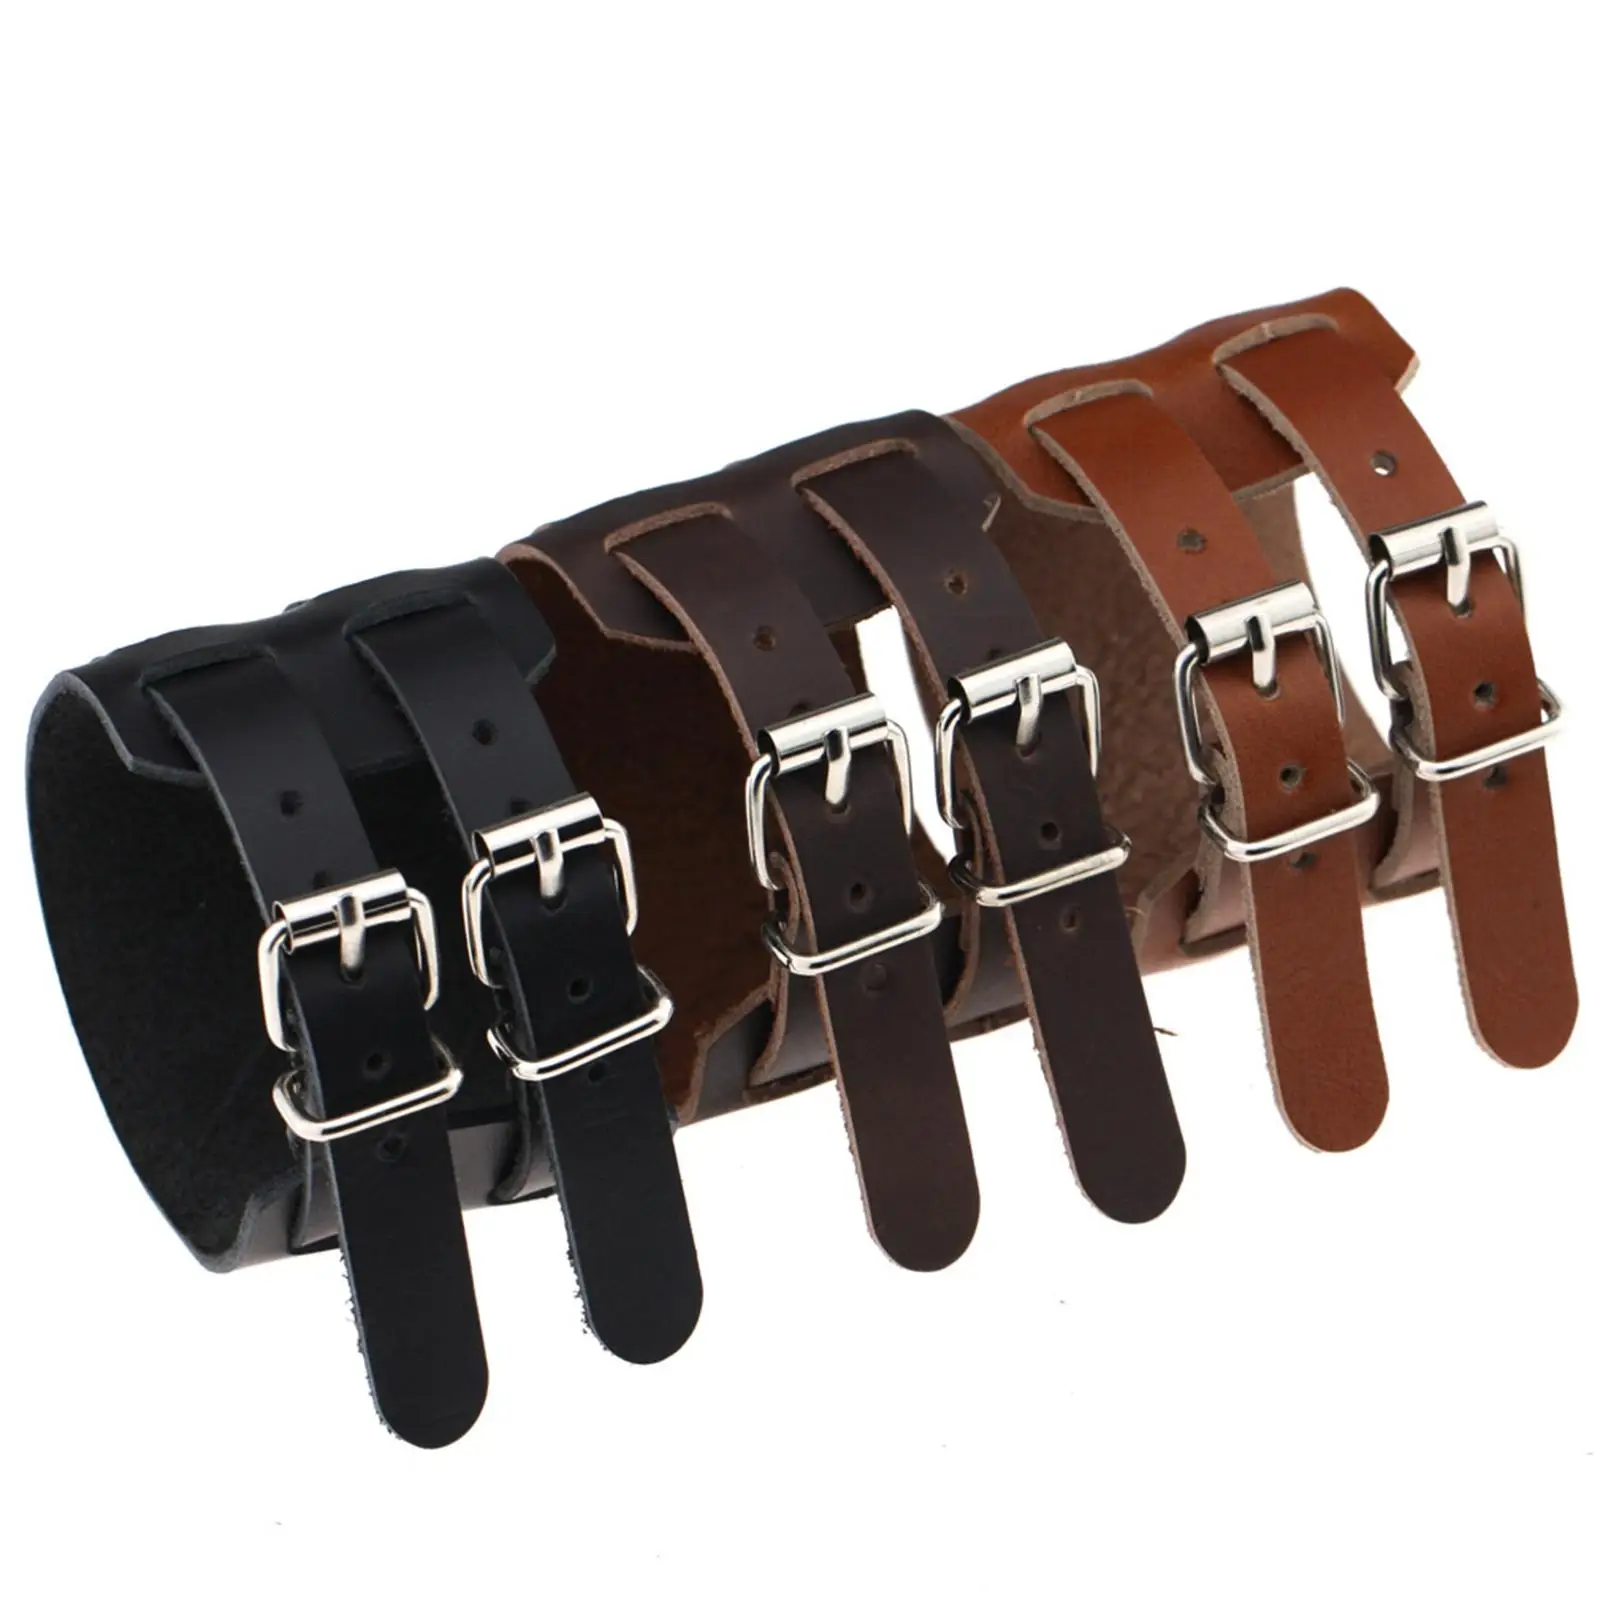 PU Leather Wristband Punk Fashion Gifts Wide Vintage Design Handmade Bracelet for Sportswear Grandpa Father Friend Son